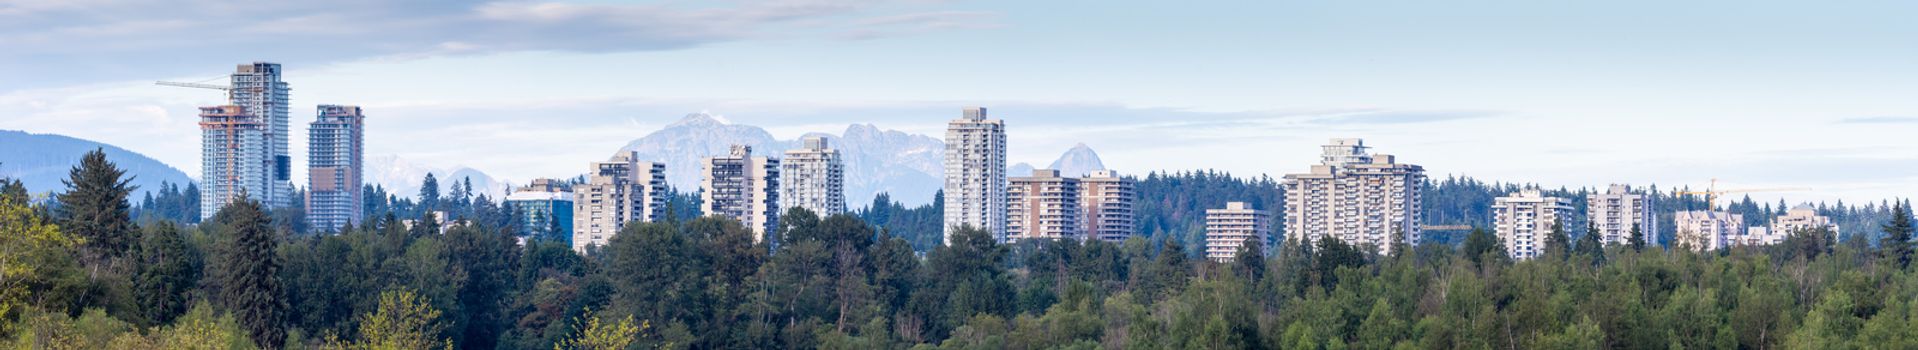 Panorama of the Burnaby, British Columbia, Canada apartment development skyline looking towards the Burnaby and Maple Ridge Mountains.